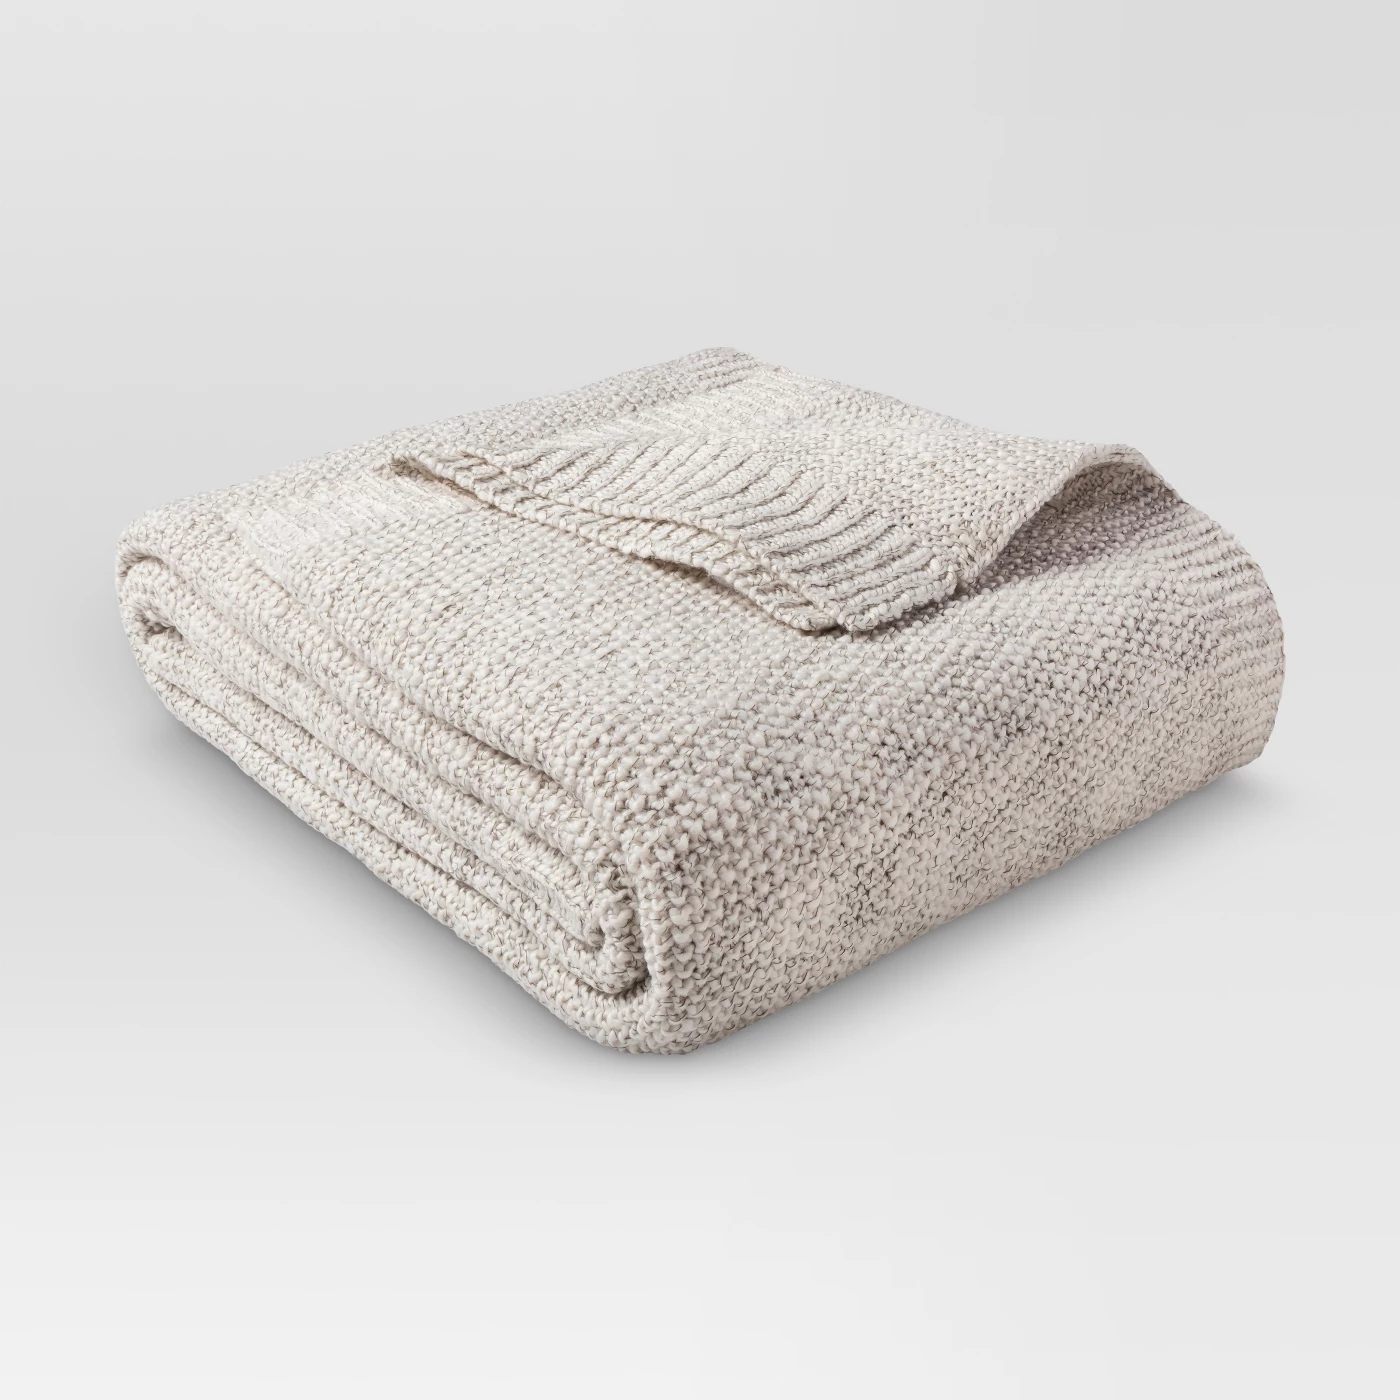 Sweater Knit Blanket - Thresholdâ¢ - image 1 of 1